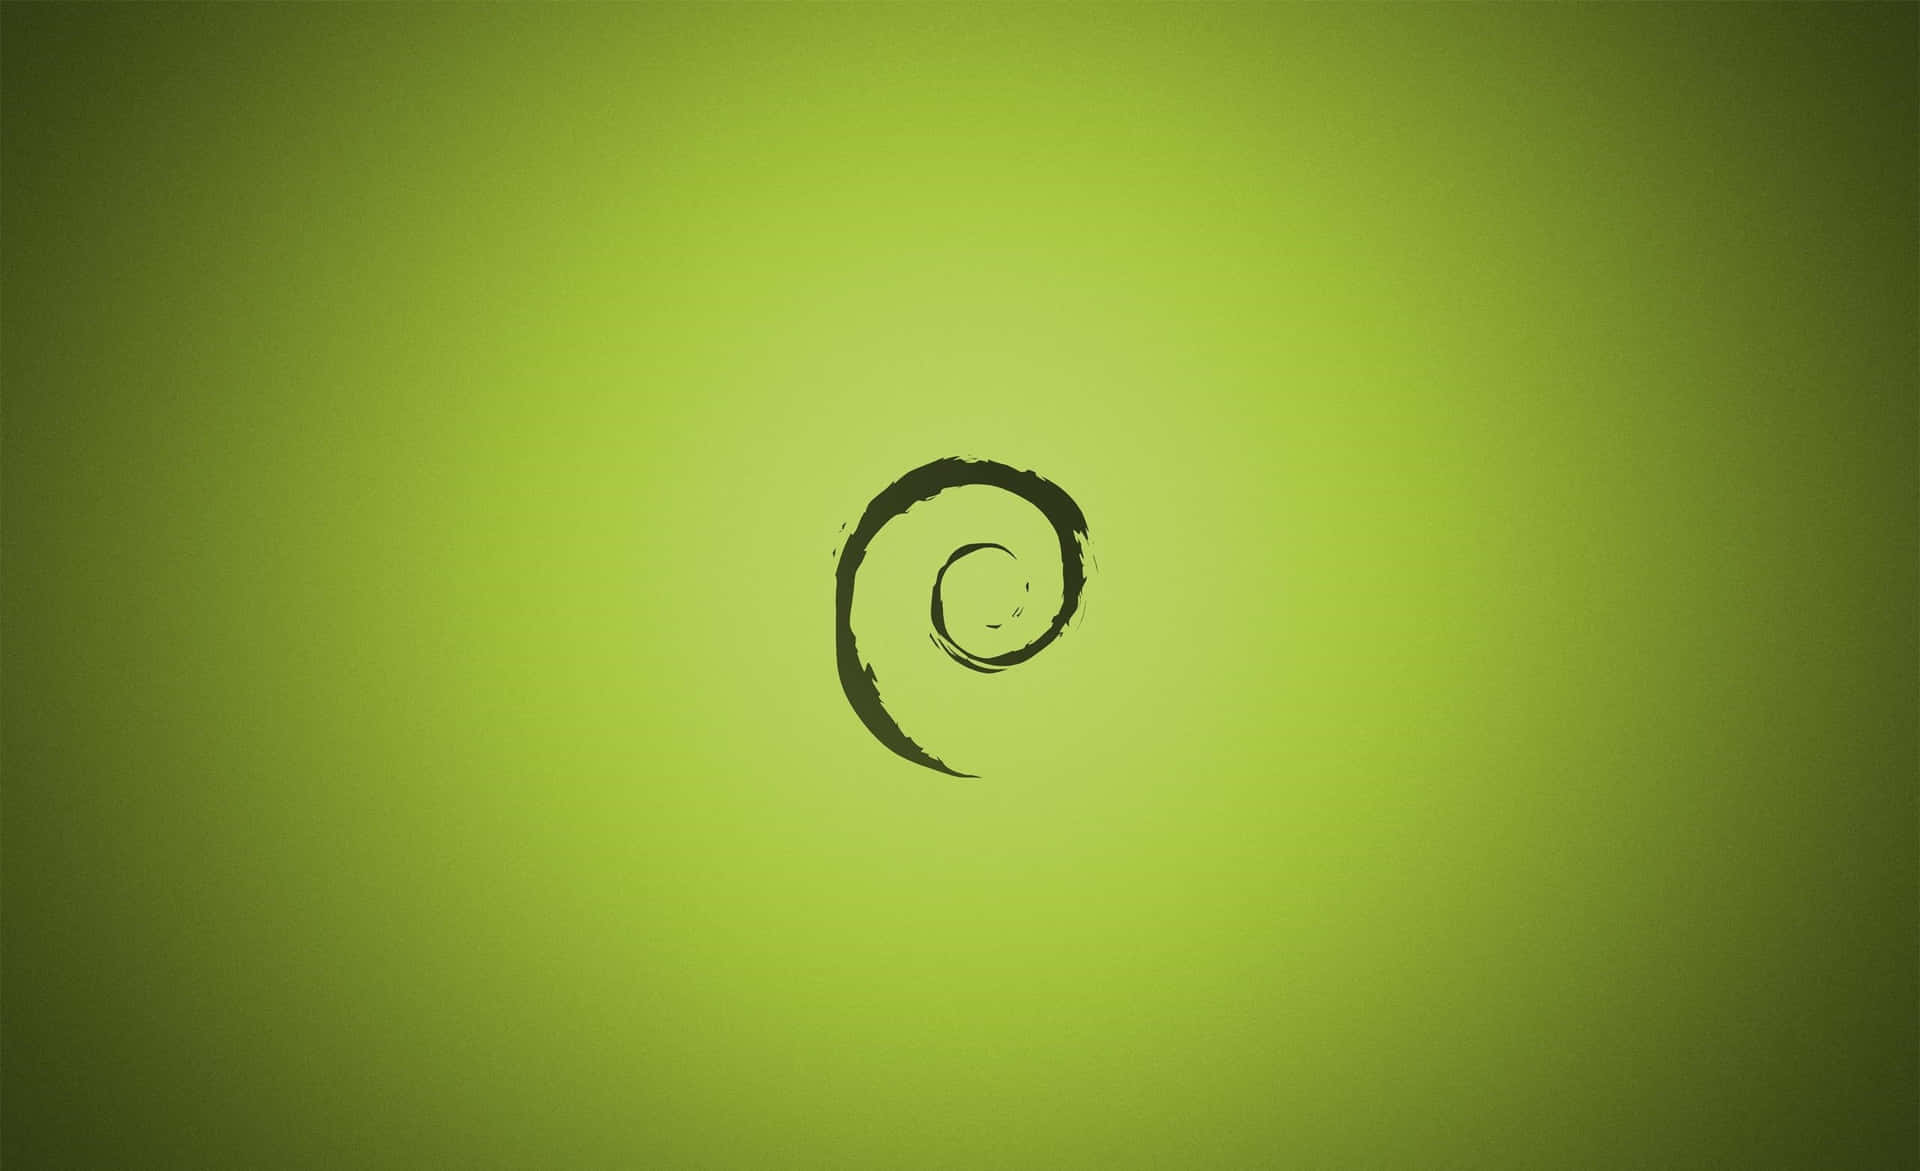 Debian Spiral Logoon Green Background Wallpaper